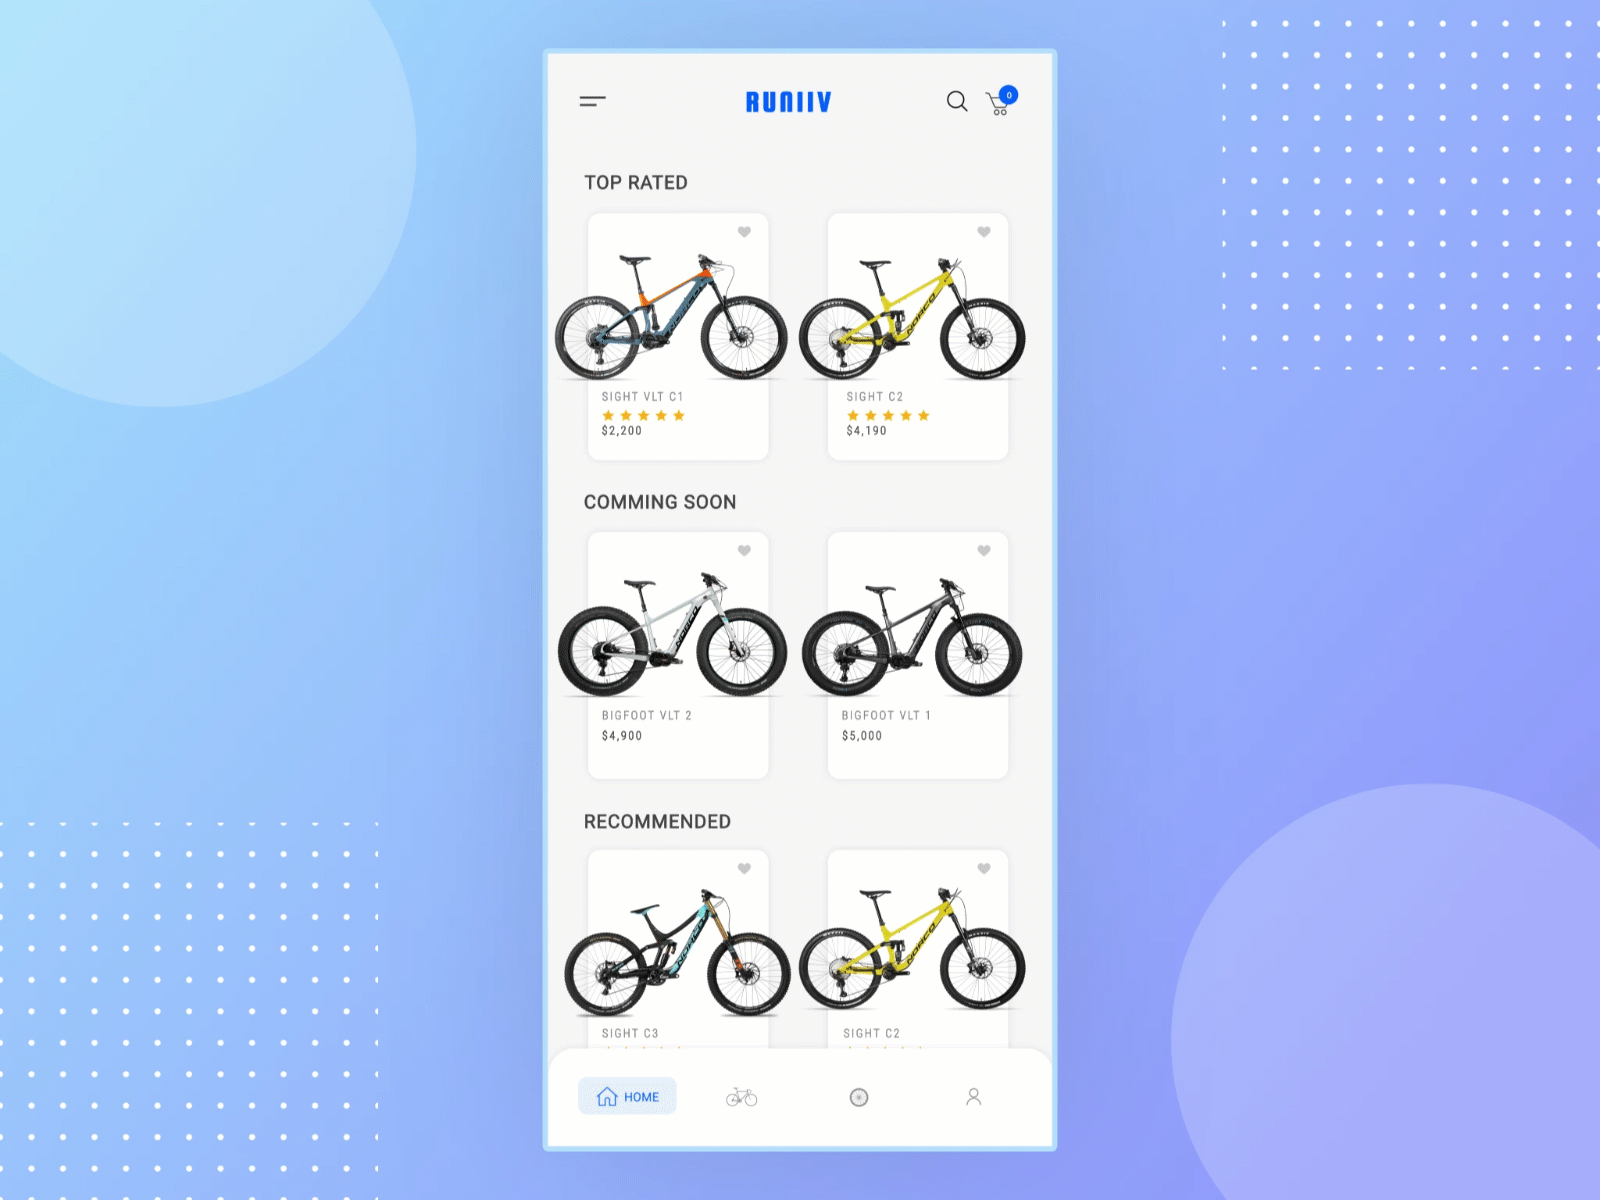 Bicycle Store App